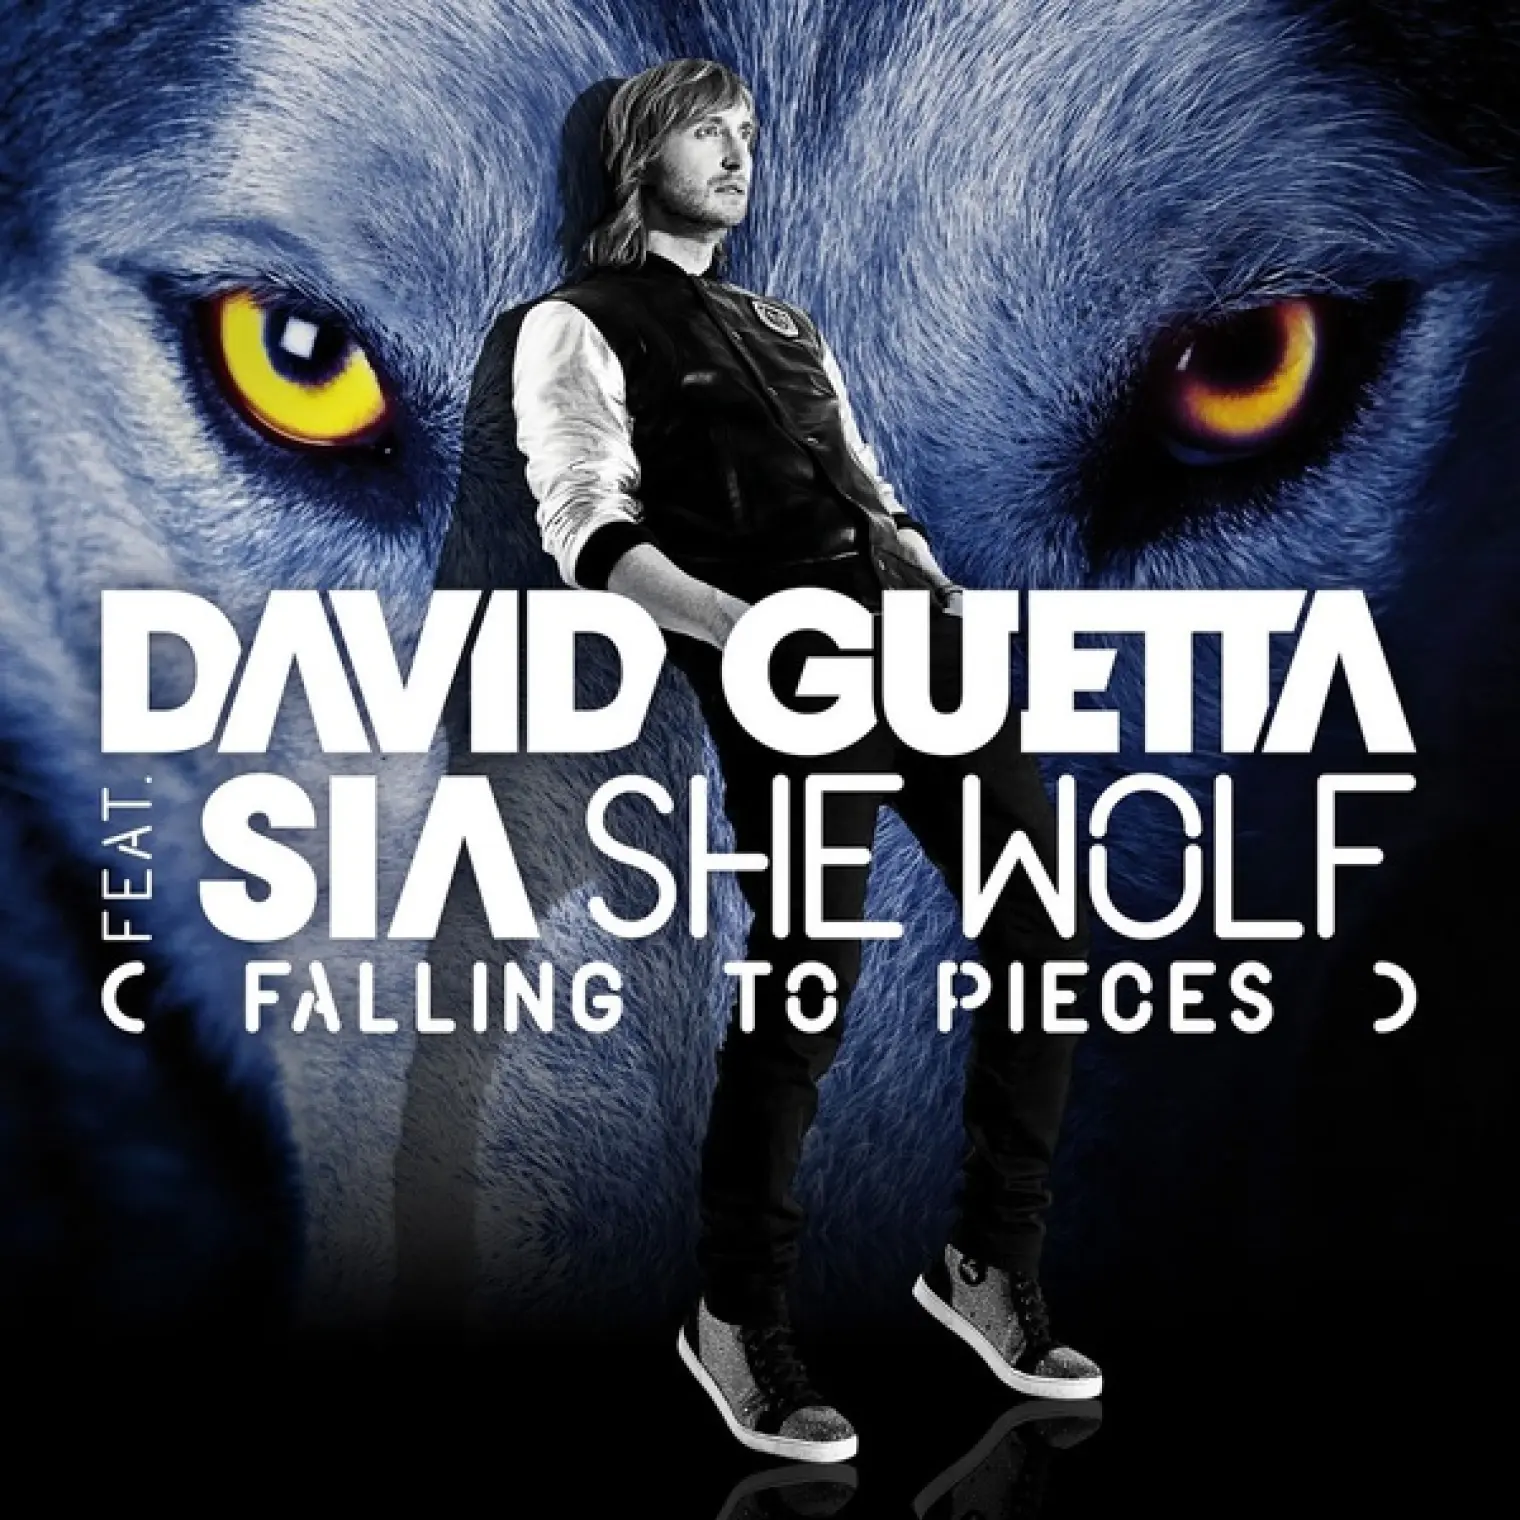 She Wolf (Falling to Pieces) (feat. Sia) -  David Guetta 